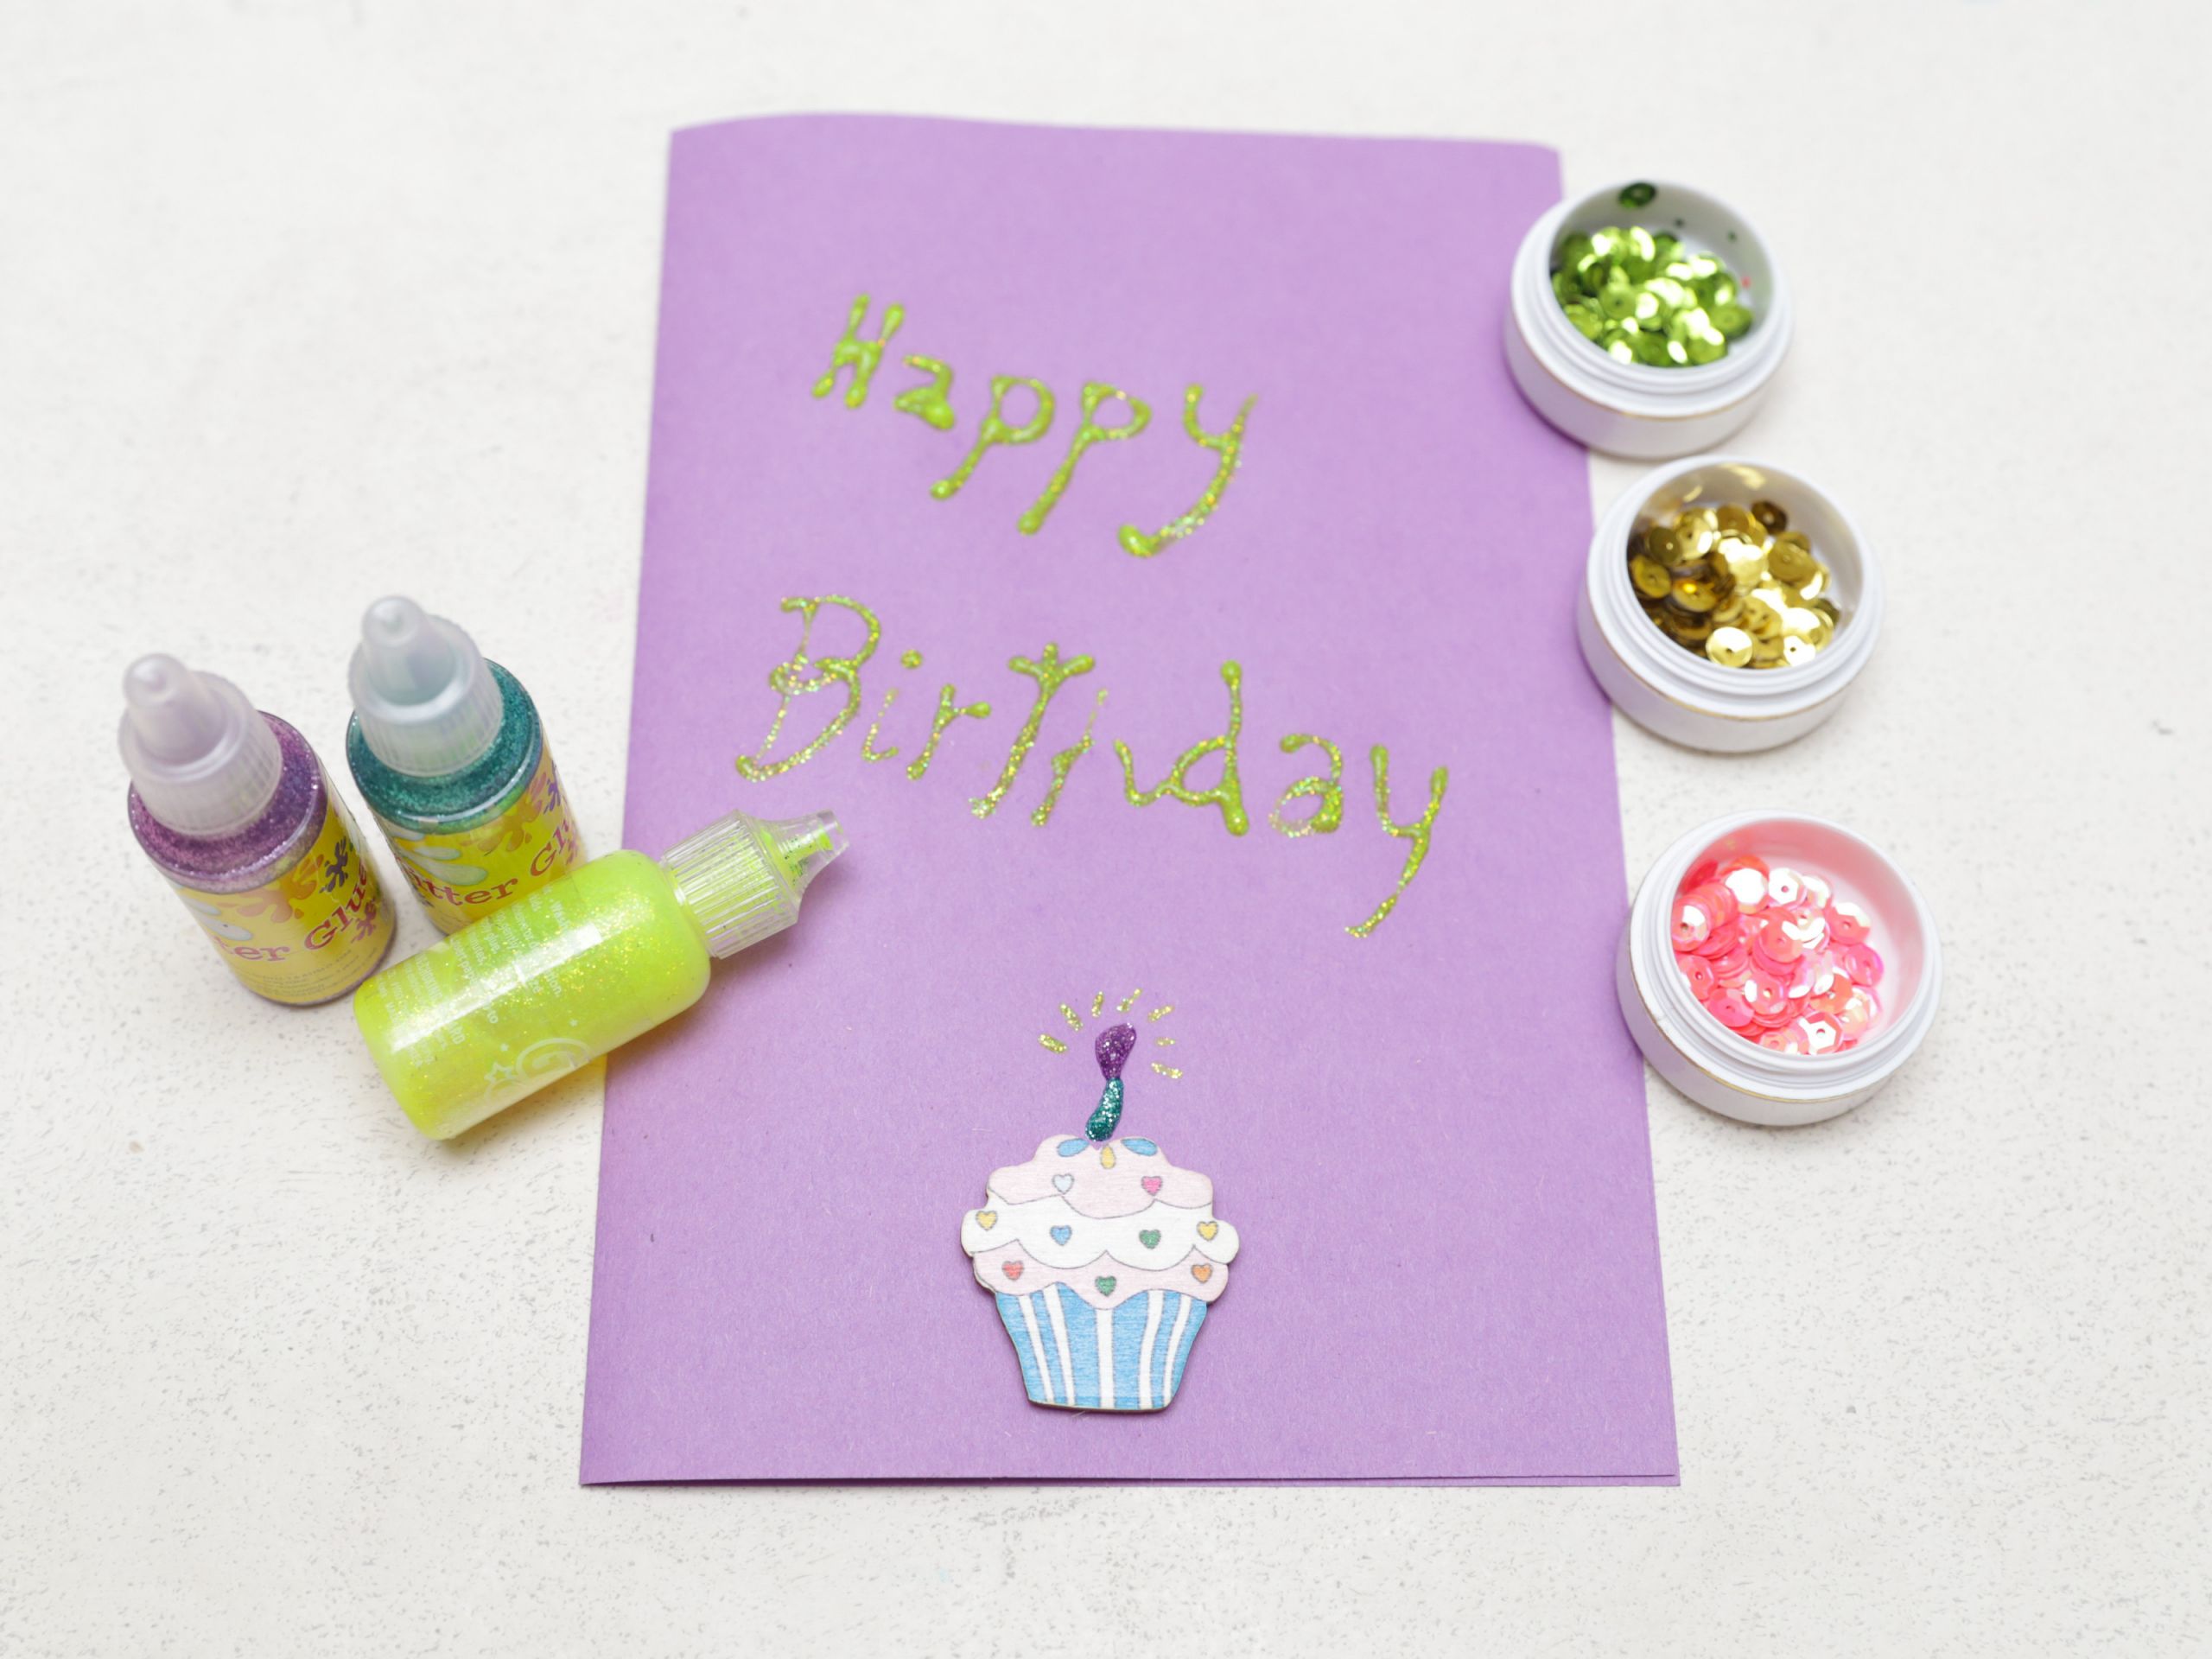 Birthday Cards To Make
 How to Make a Simple Handmade Birthday Card 15 Steps